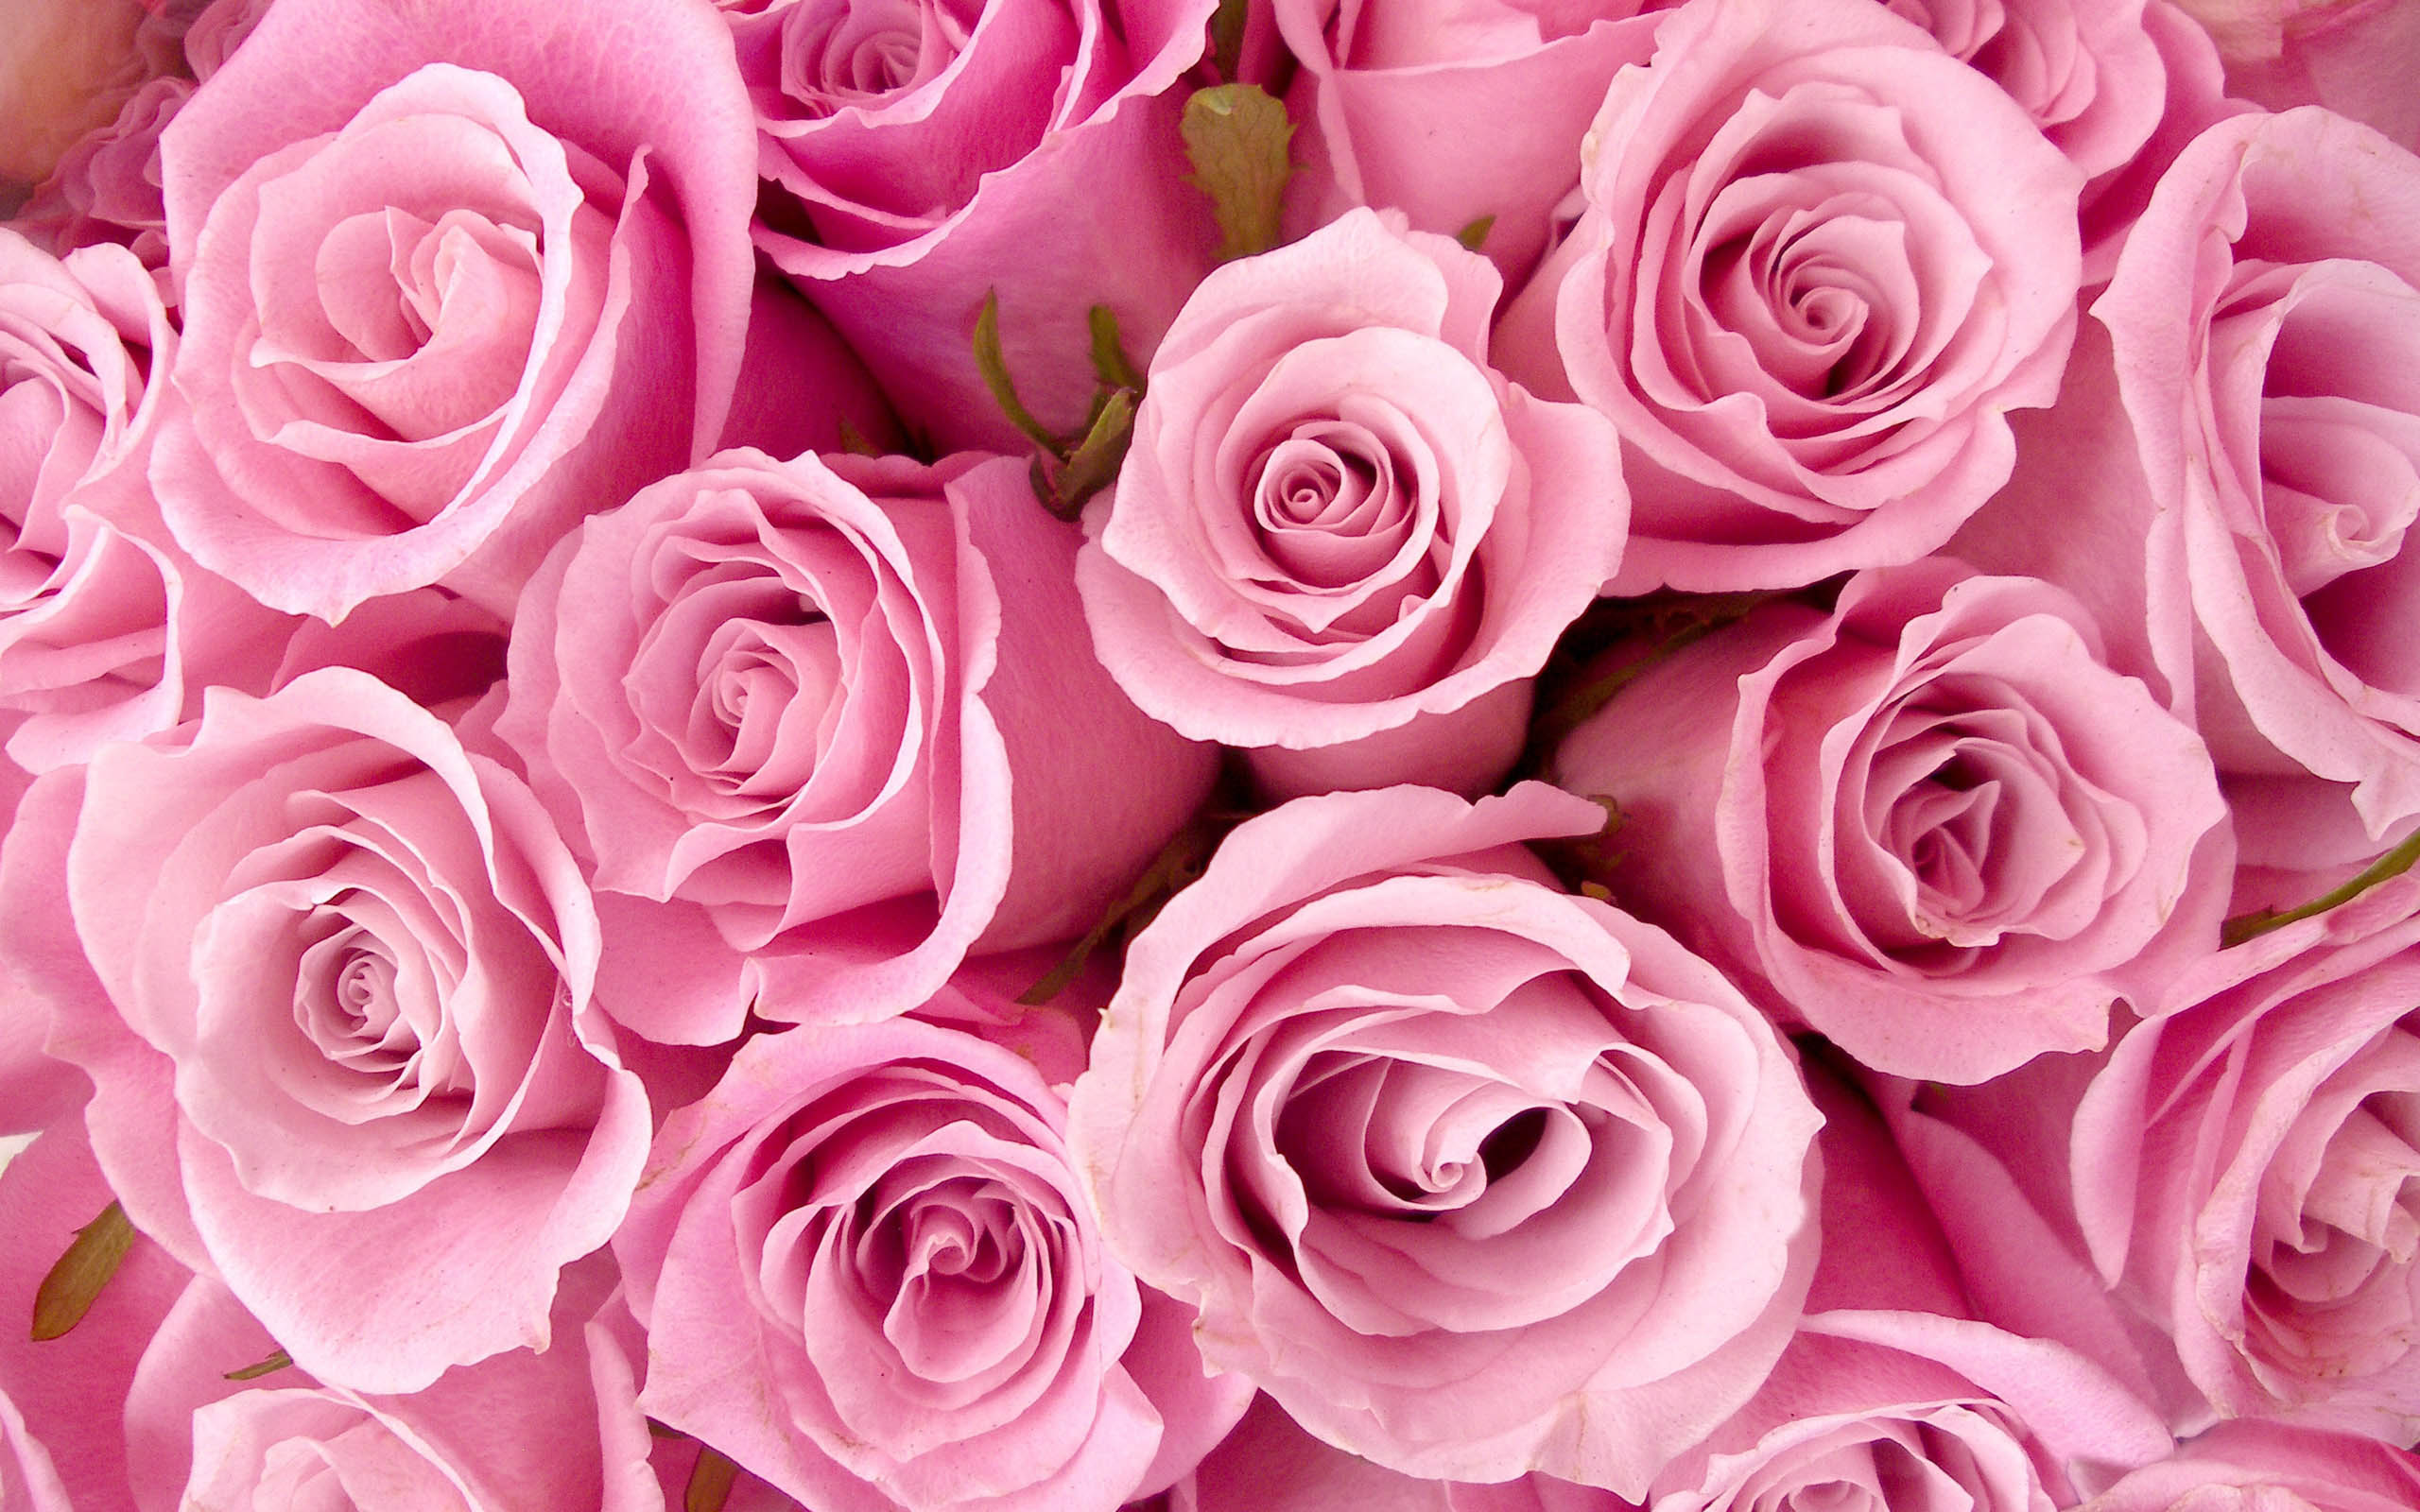 Special Pink Roses195449185 - Special Pink Roses - Special, Roses, Pink